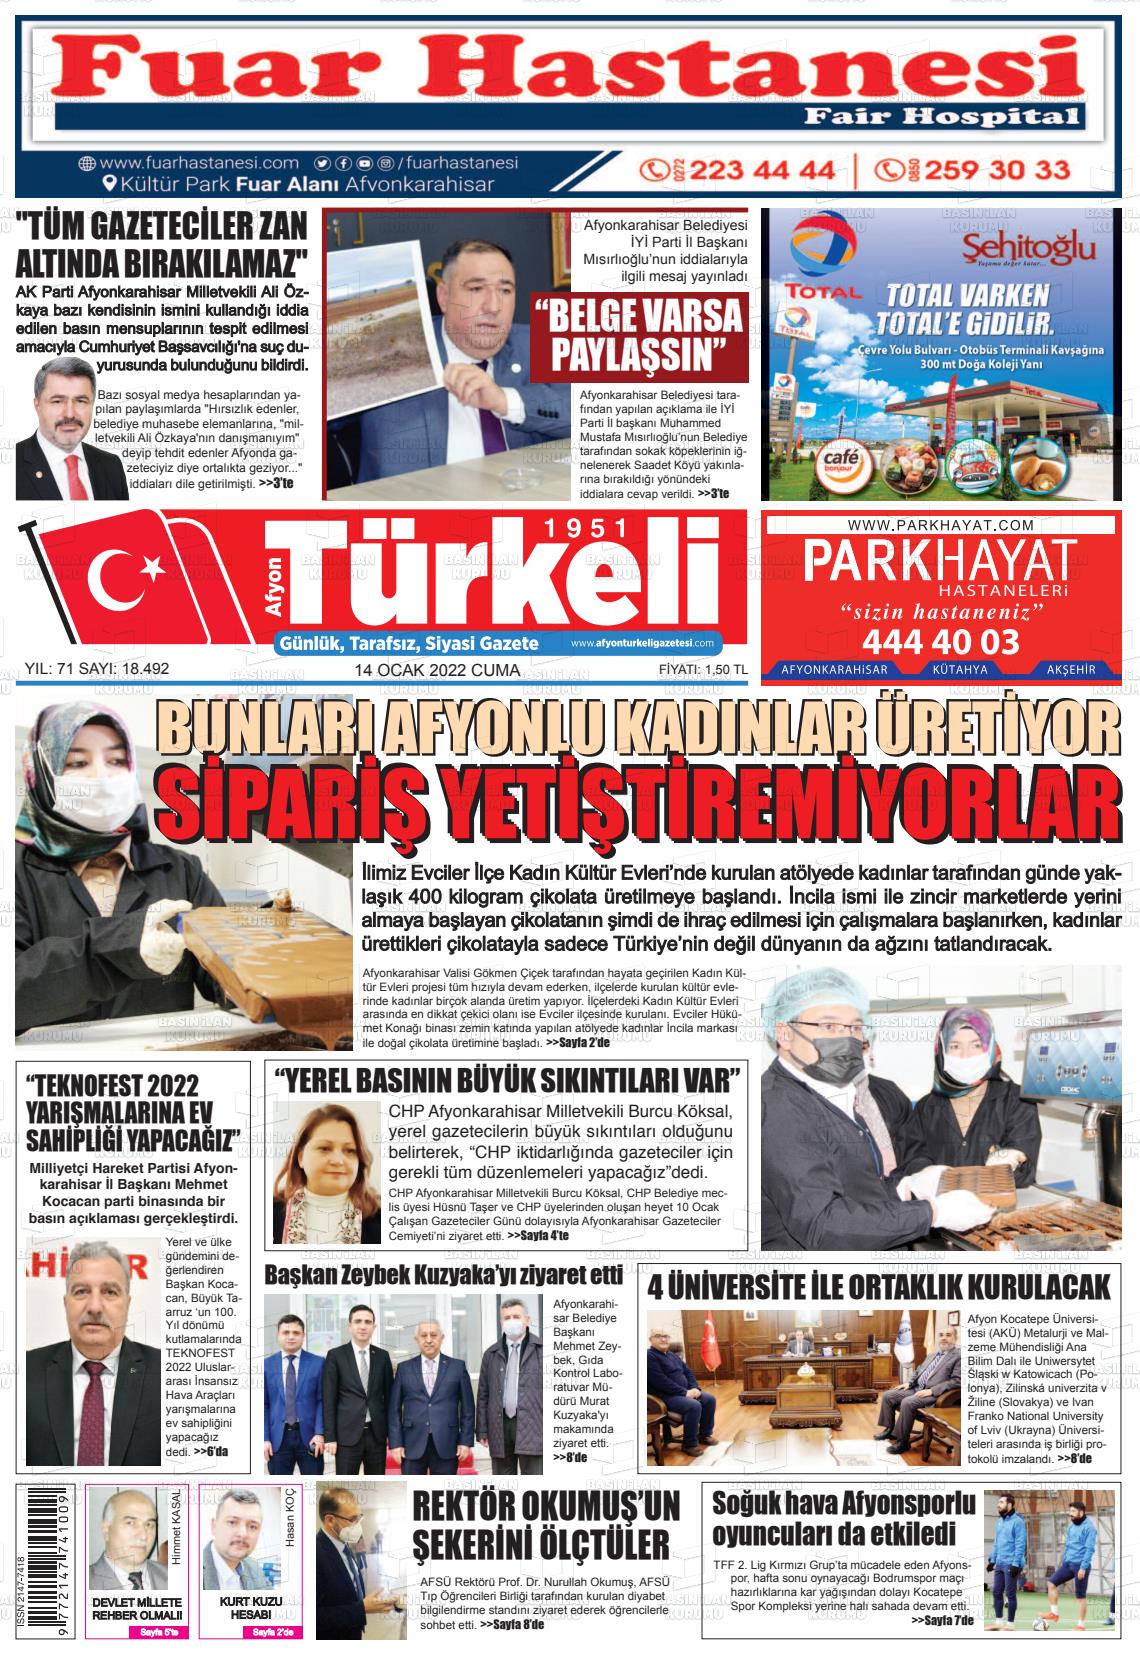 14 Ocak 2022 Afyon Türkeli Gazete Manşeti